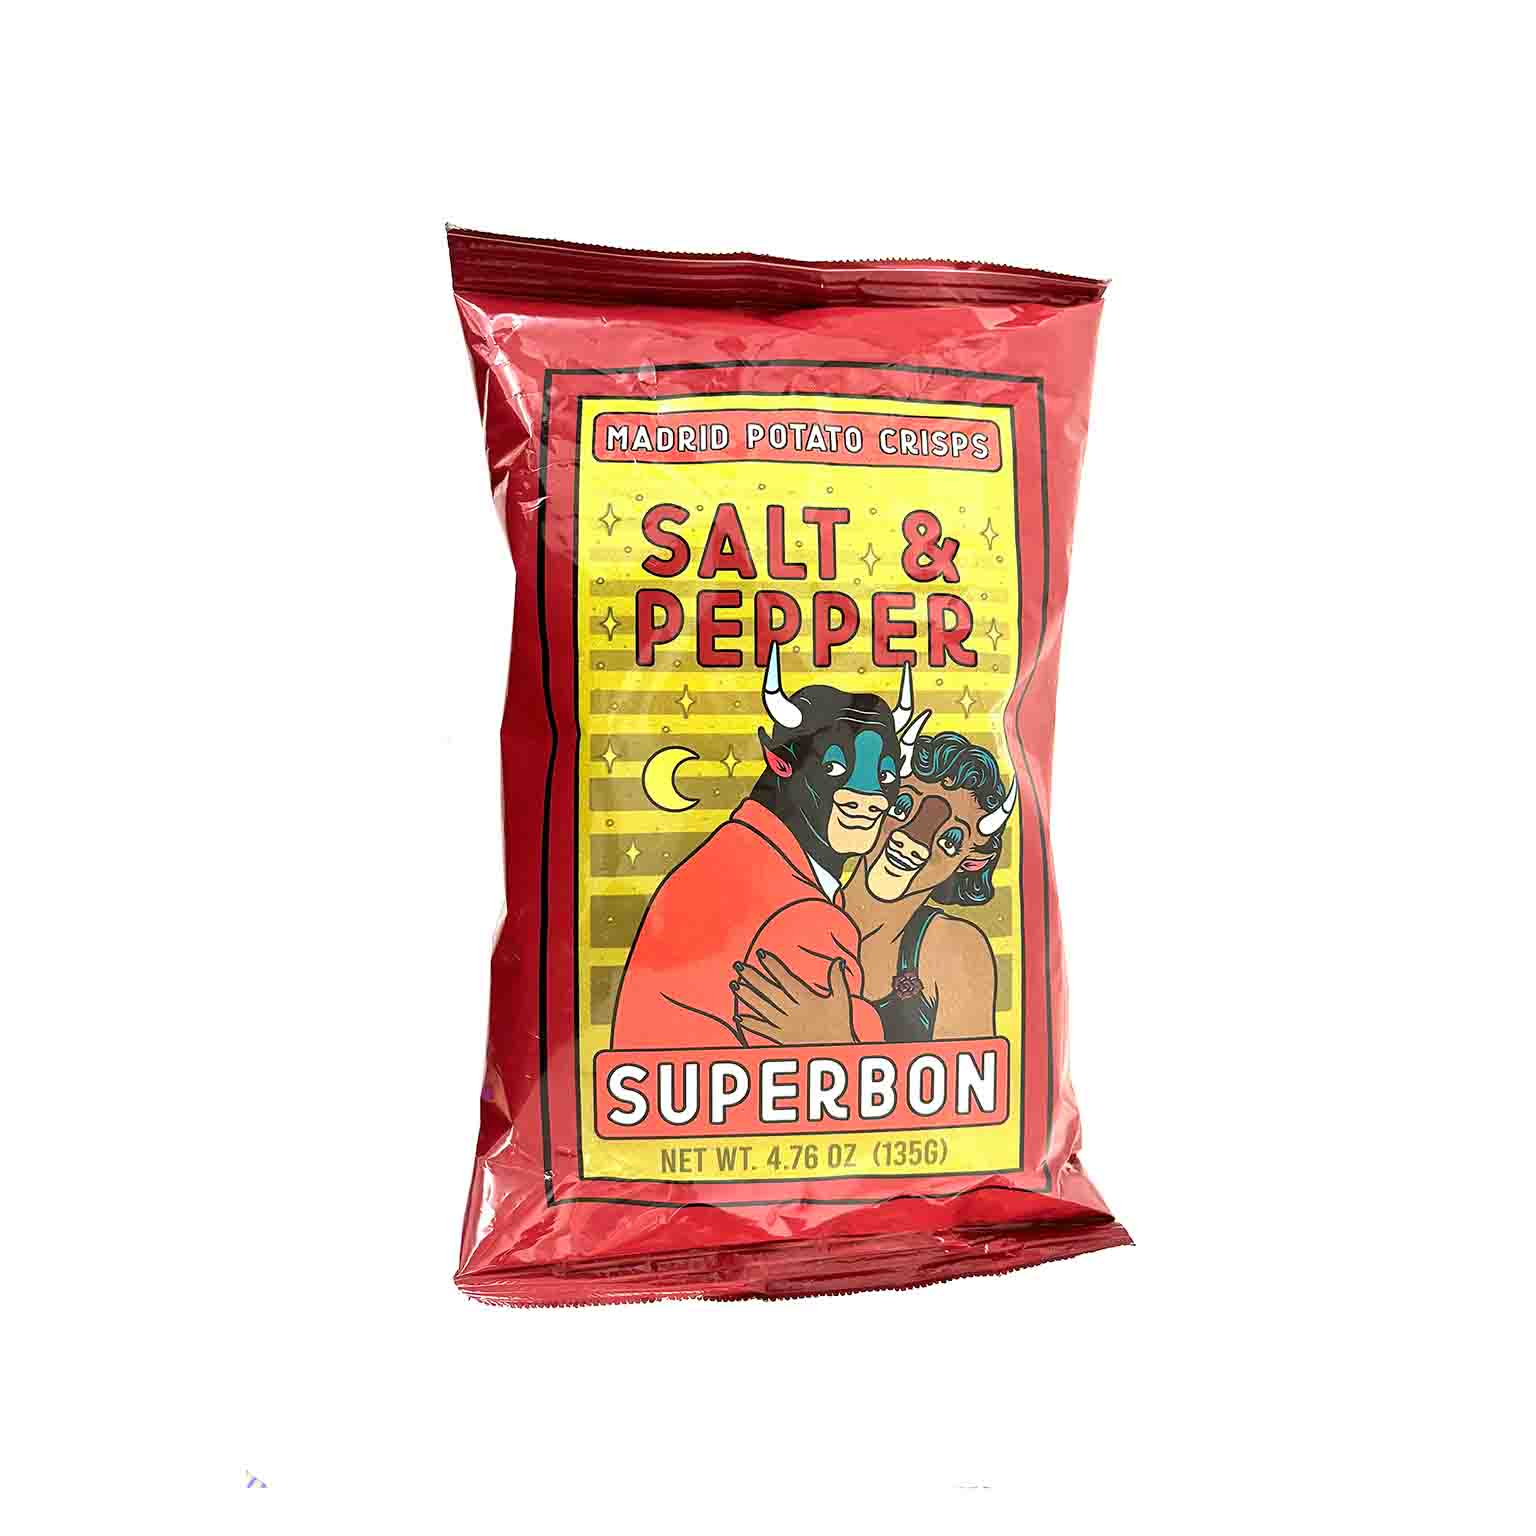 SUPERBON SALT & PEPPER POTATO CHIPS 135g